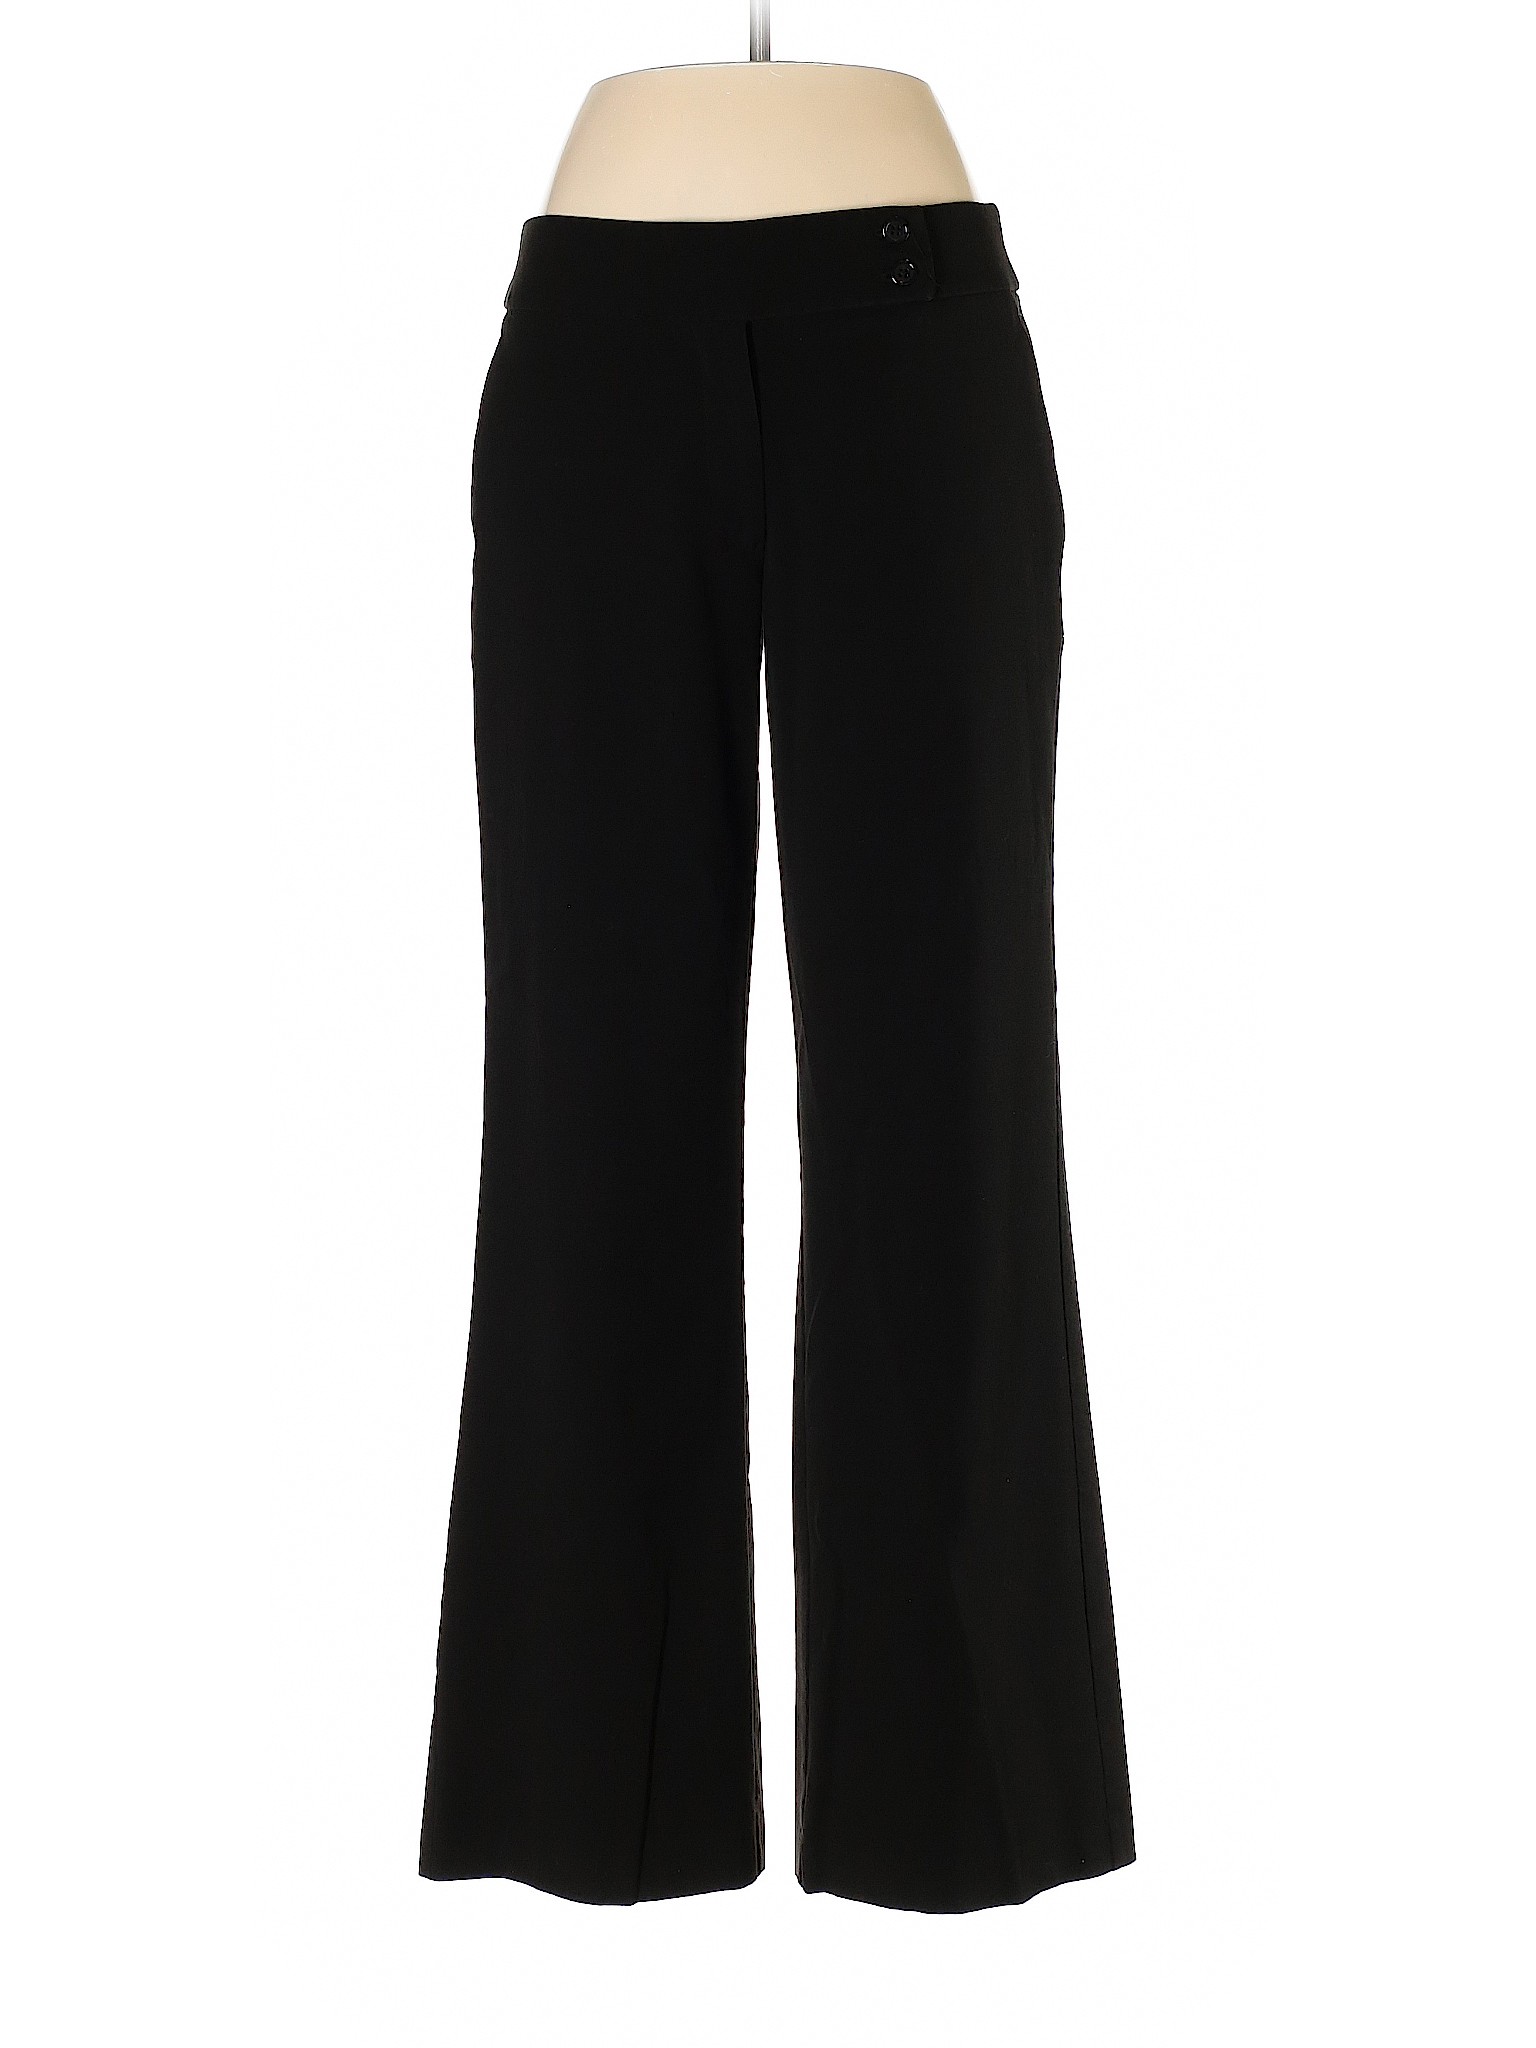 Ninety Women Black Dress Pants 6 | eBay